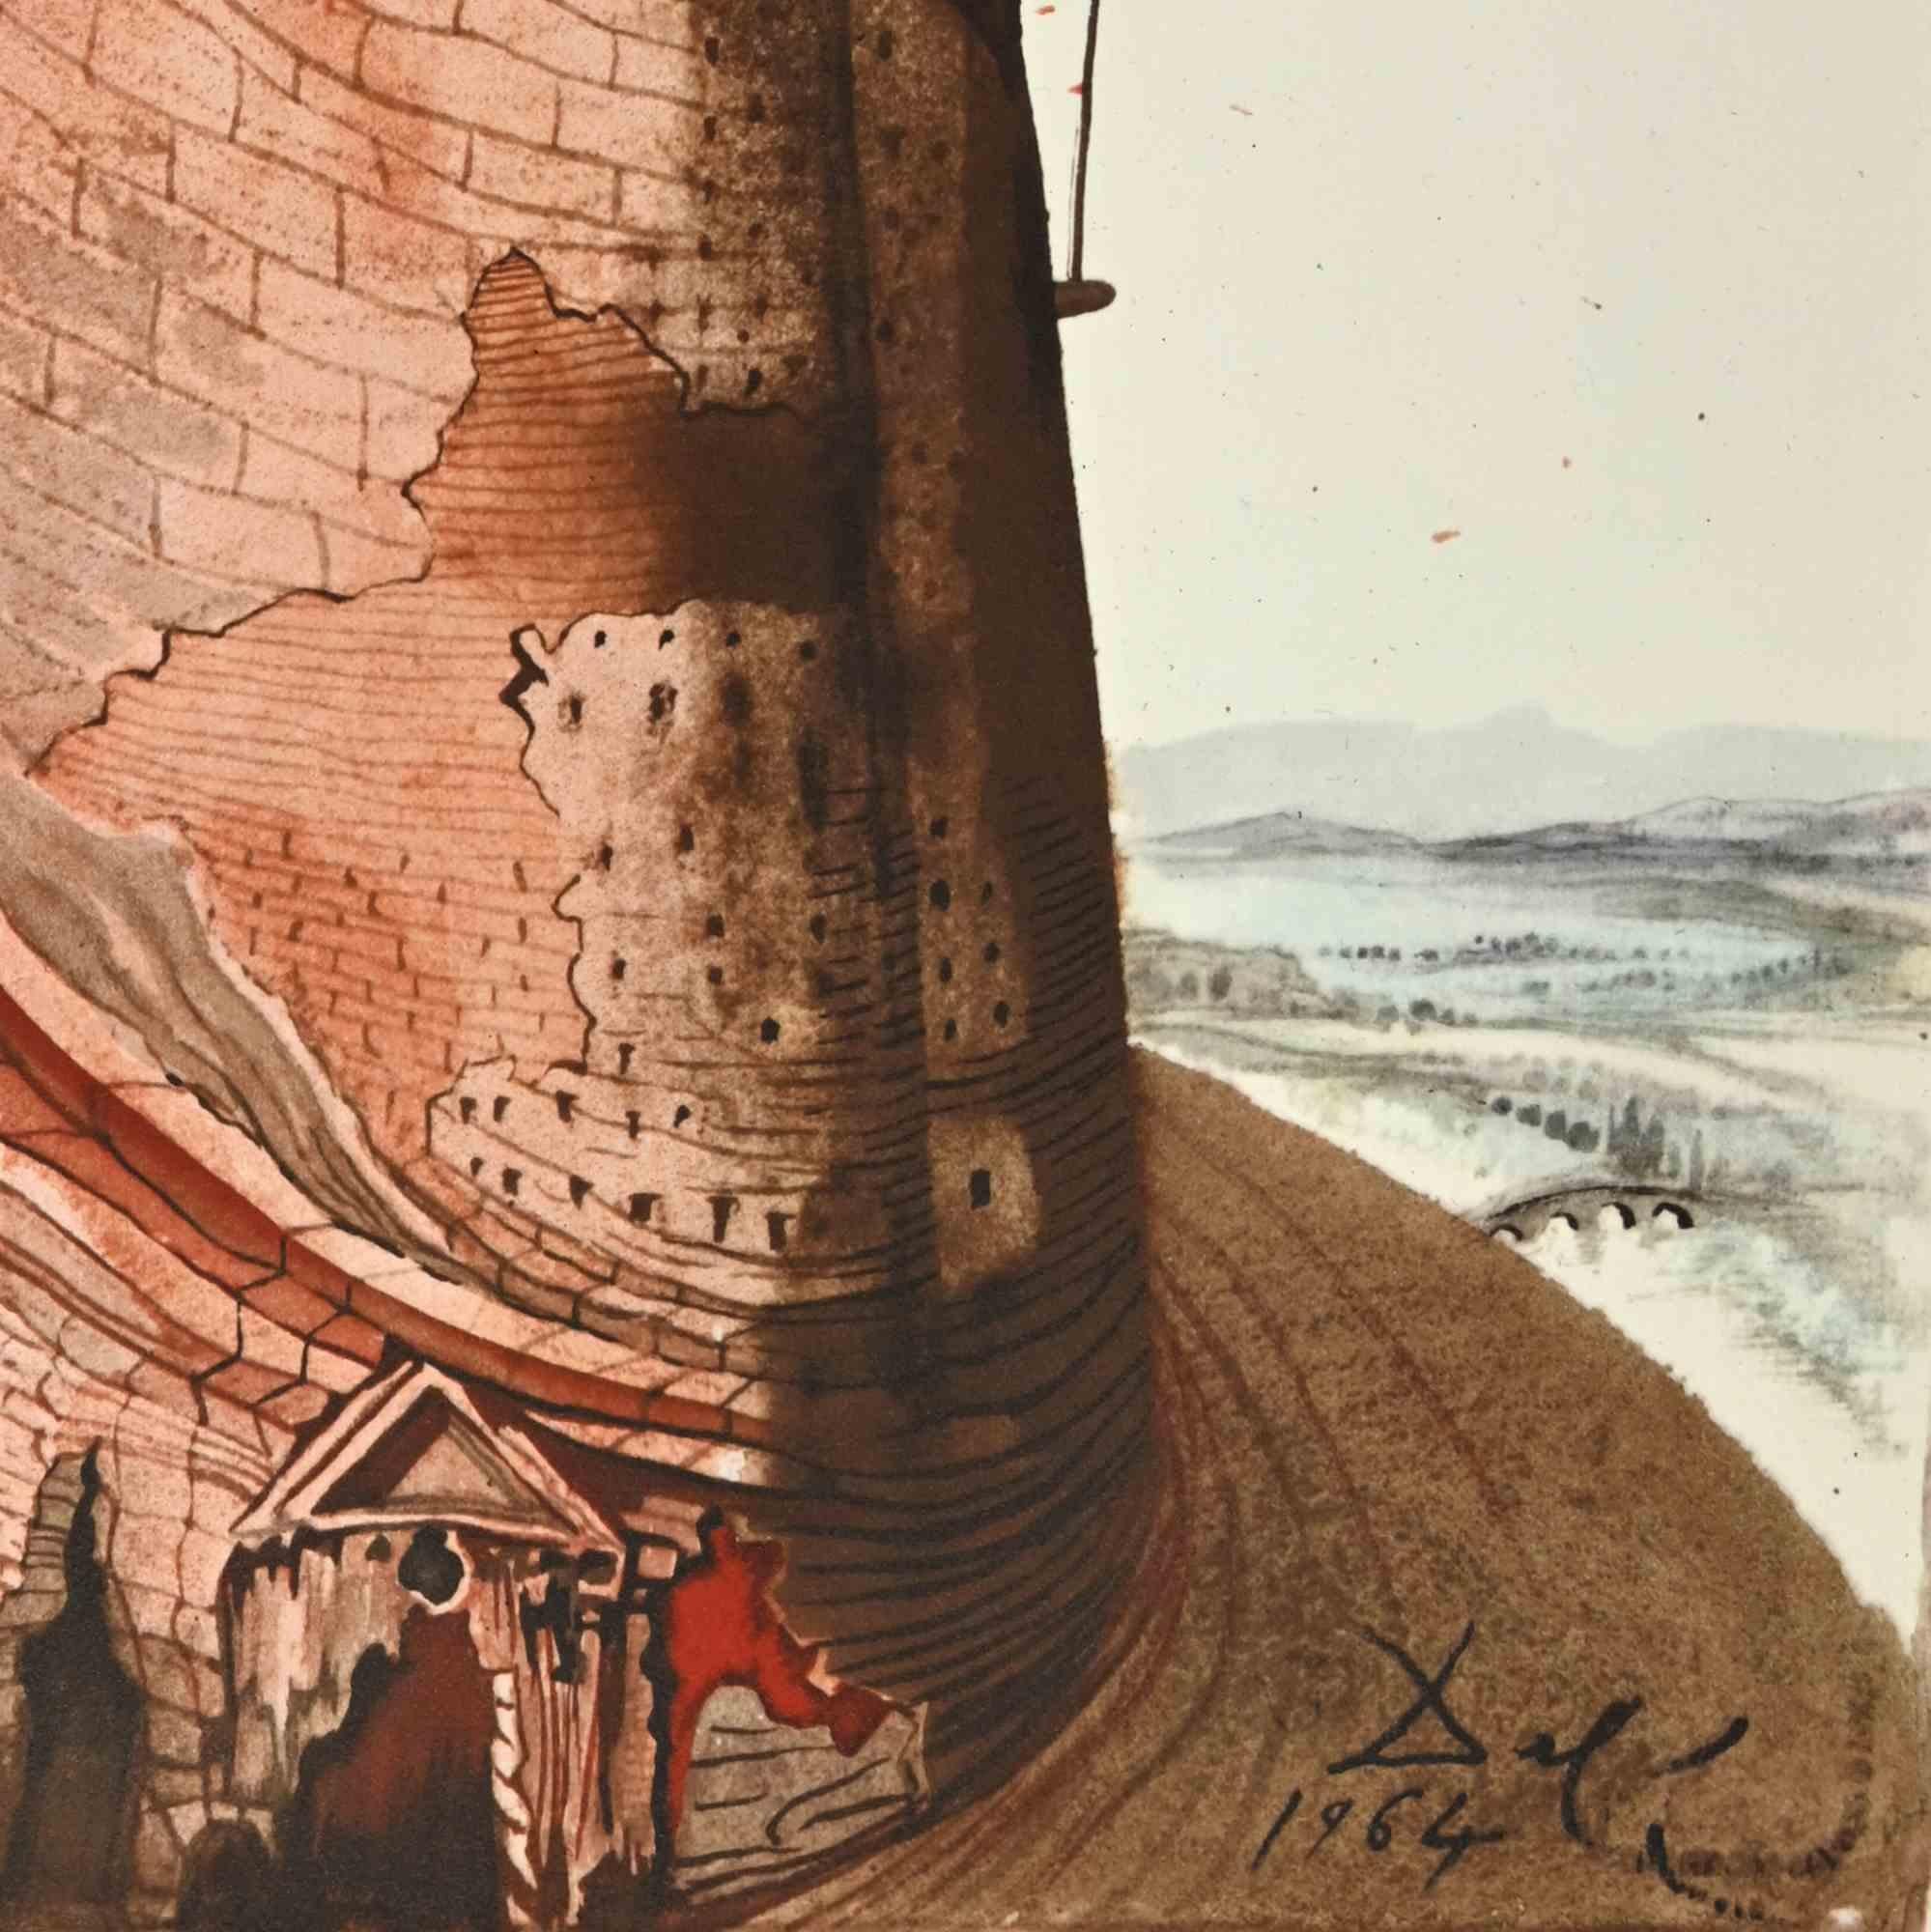 Turris Babel - Lithograph  - 1964 - Print by Salvador Dalí